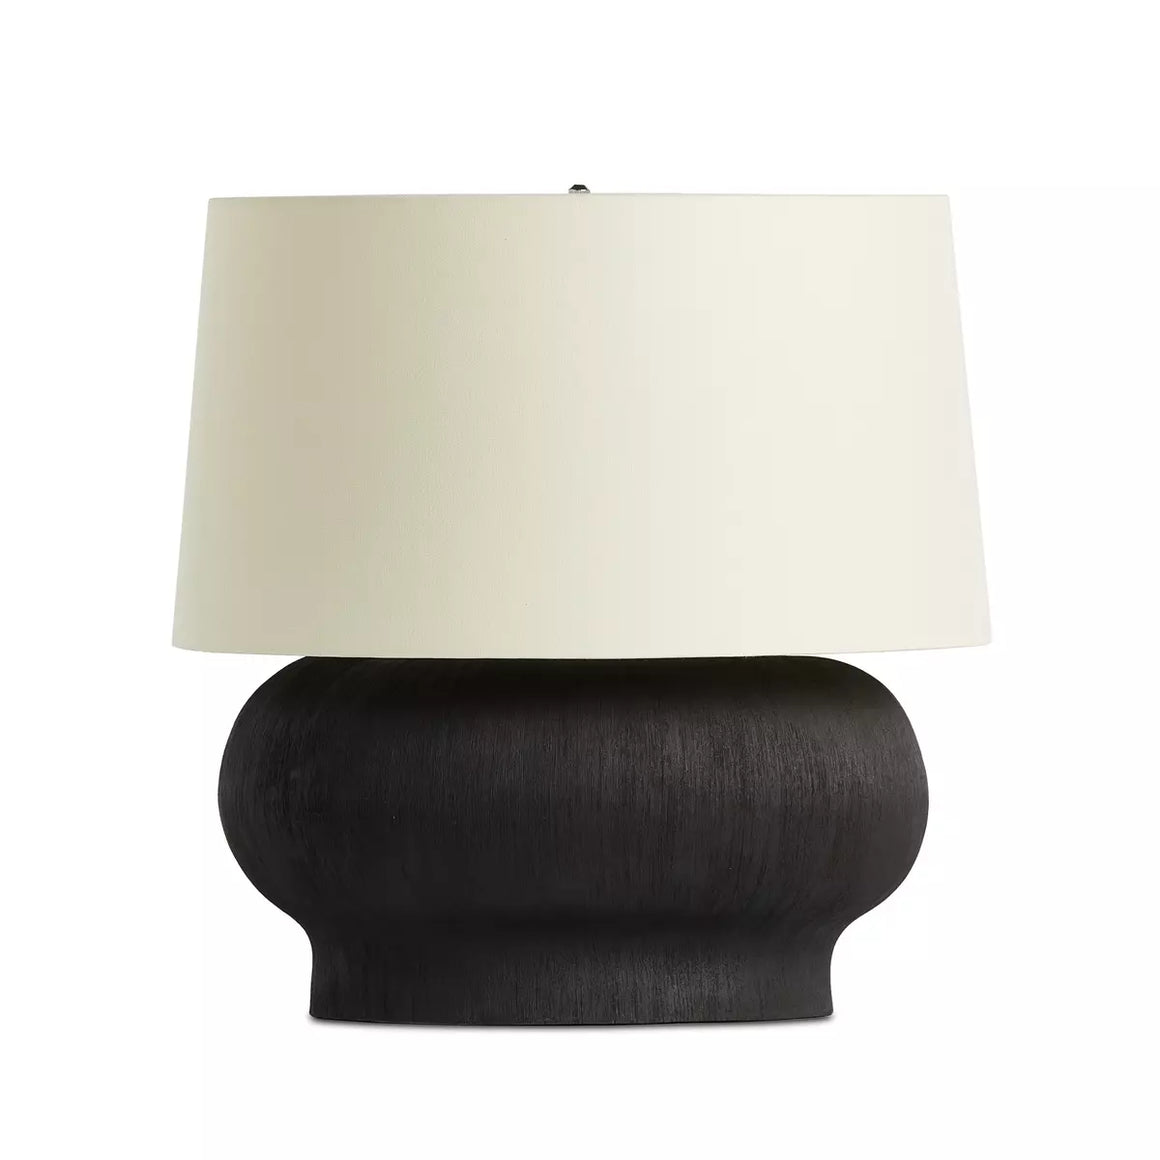 Kragen Table Lamp - Textured Matte Black Porcelain Ceramic